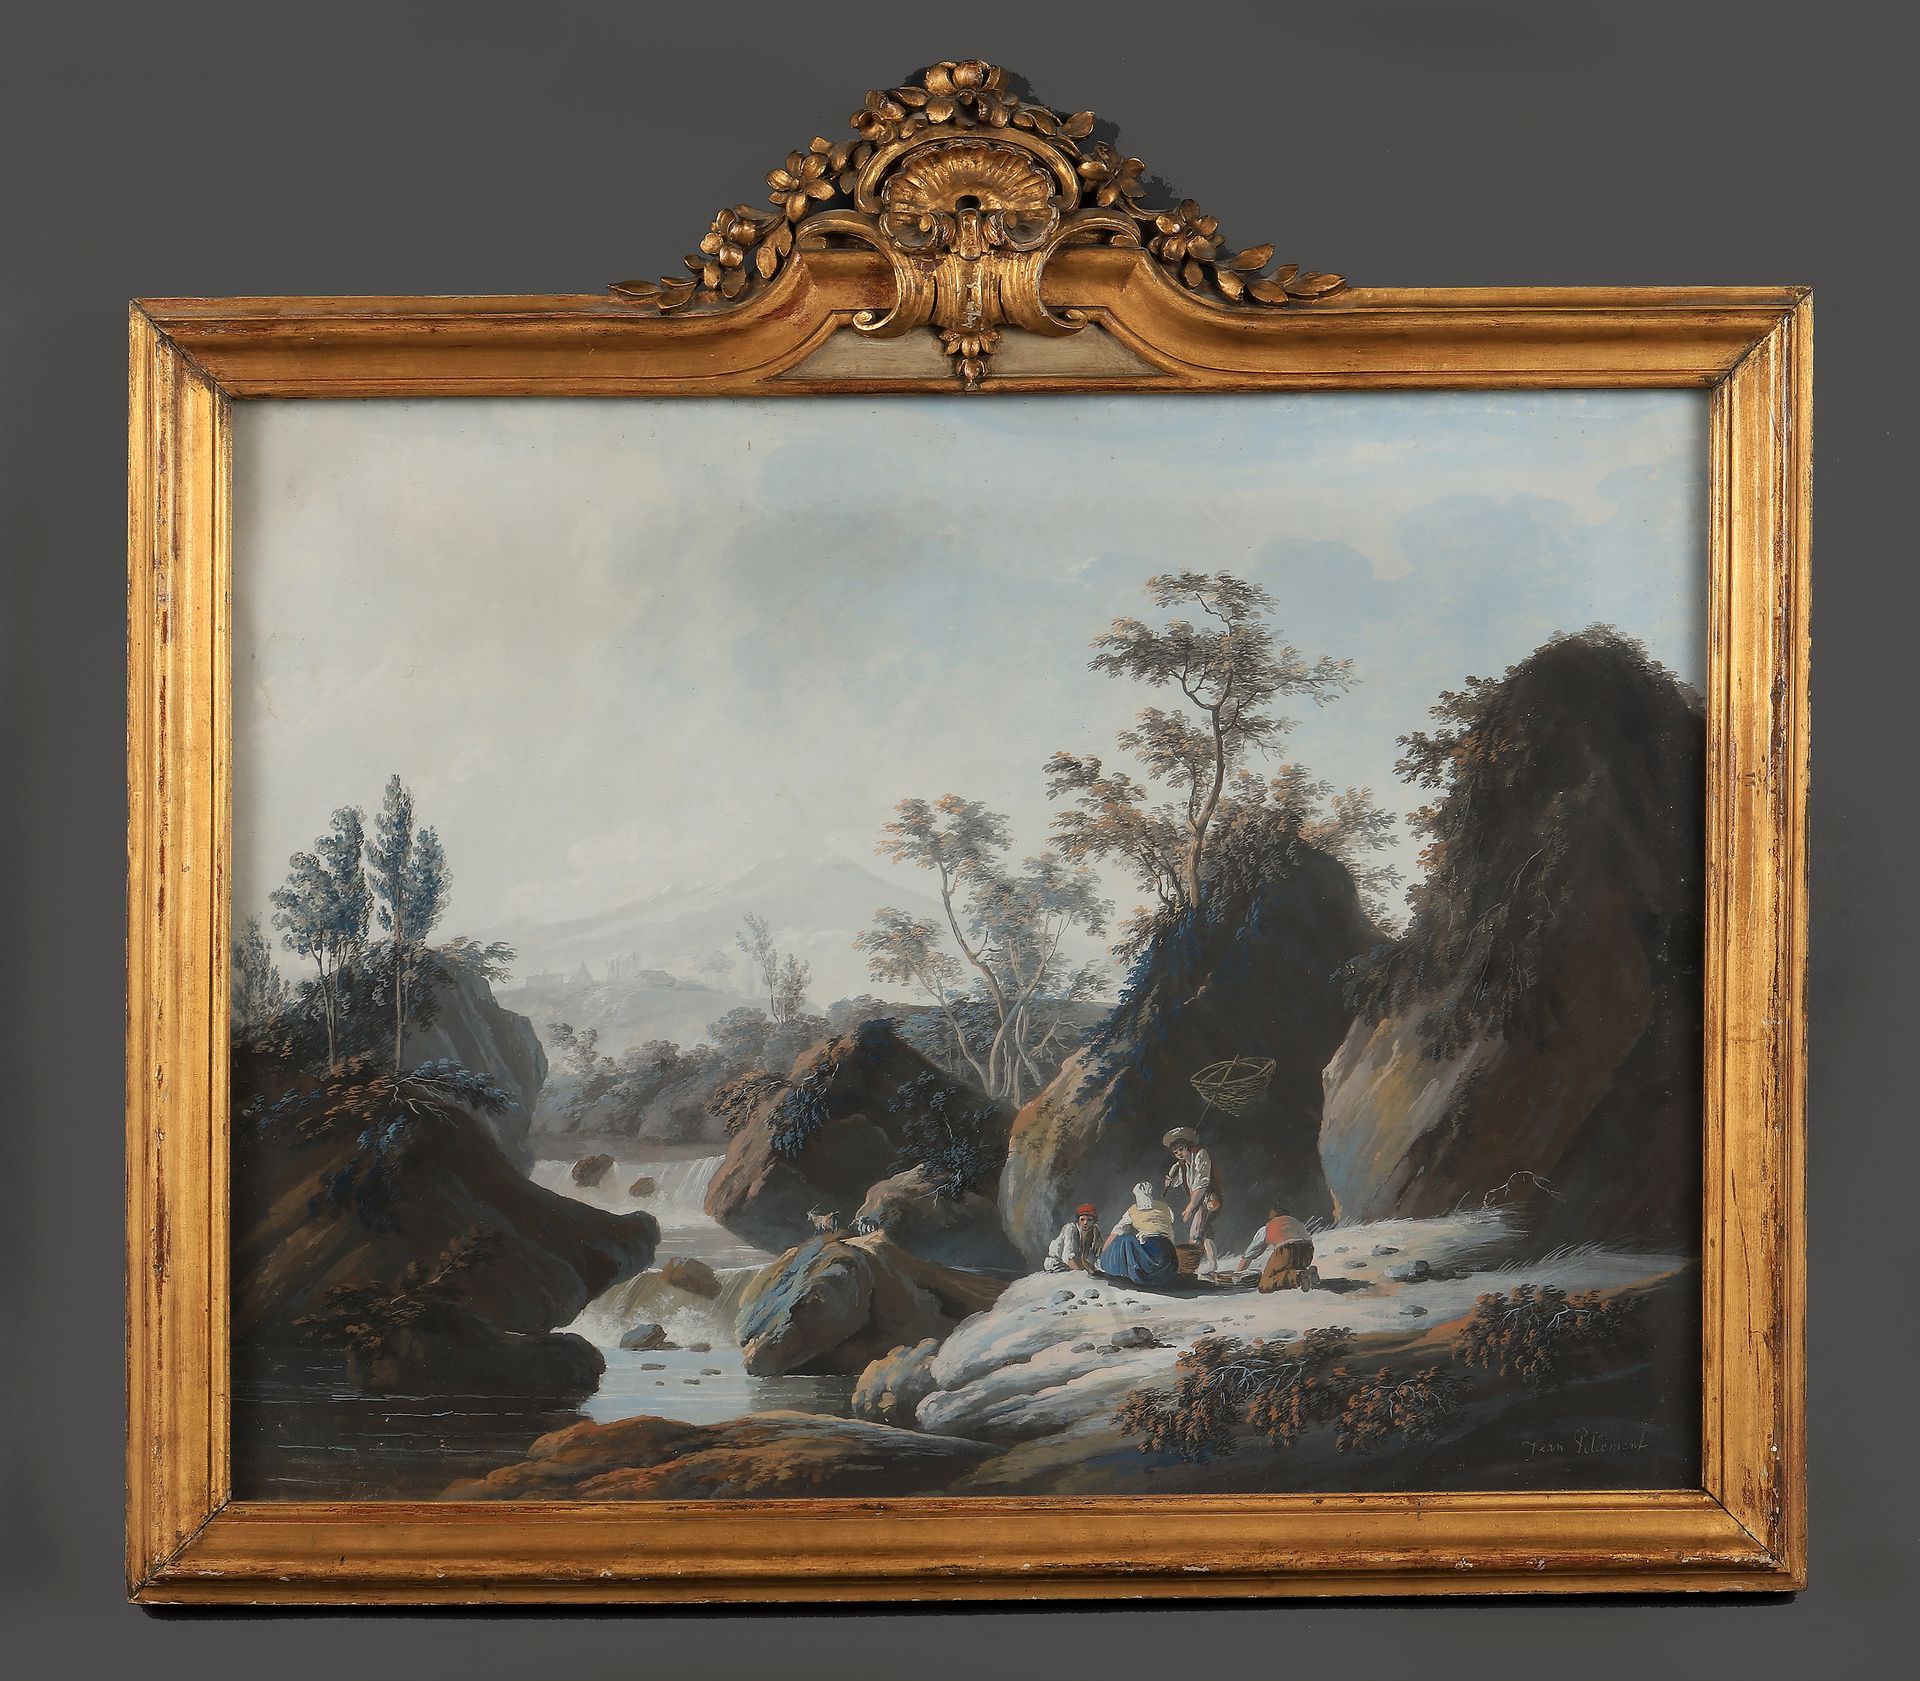 Null 让-皮耶特 (1728-1808)

在溪流中捕鱼

右下角有签名的水粉画（左边天空的湿润度）。

47 x 63 cm



专家 : 贝赛尔的办公&hellip;